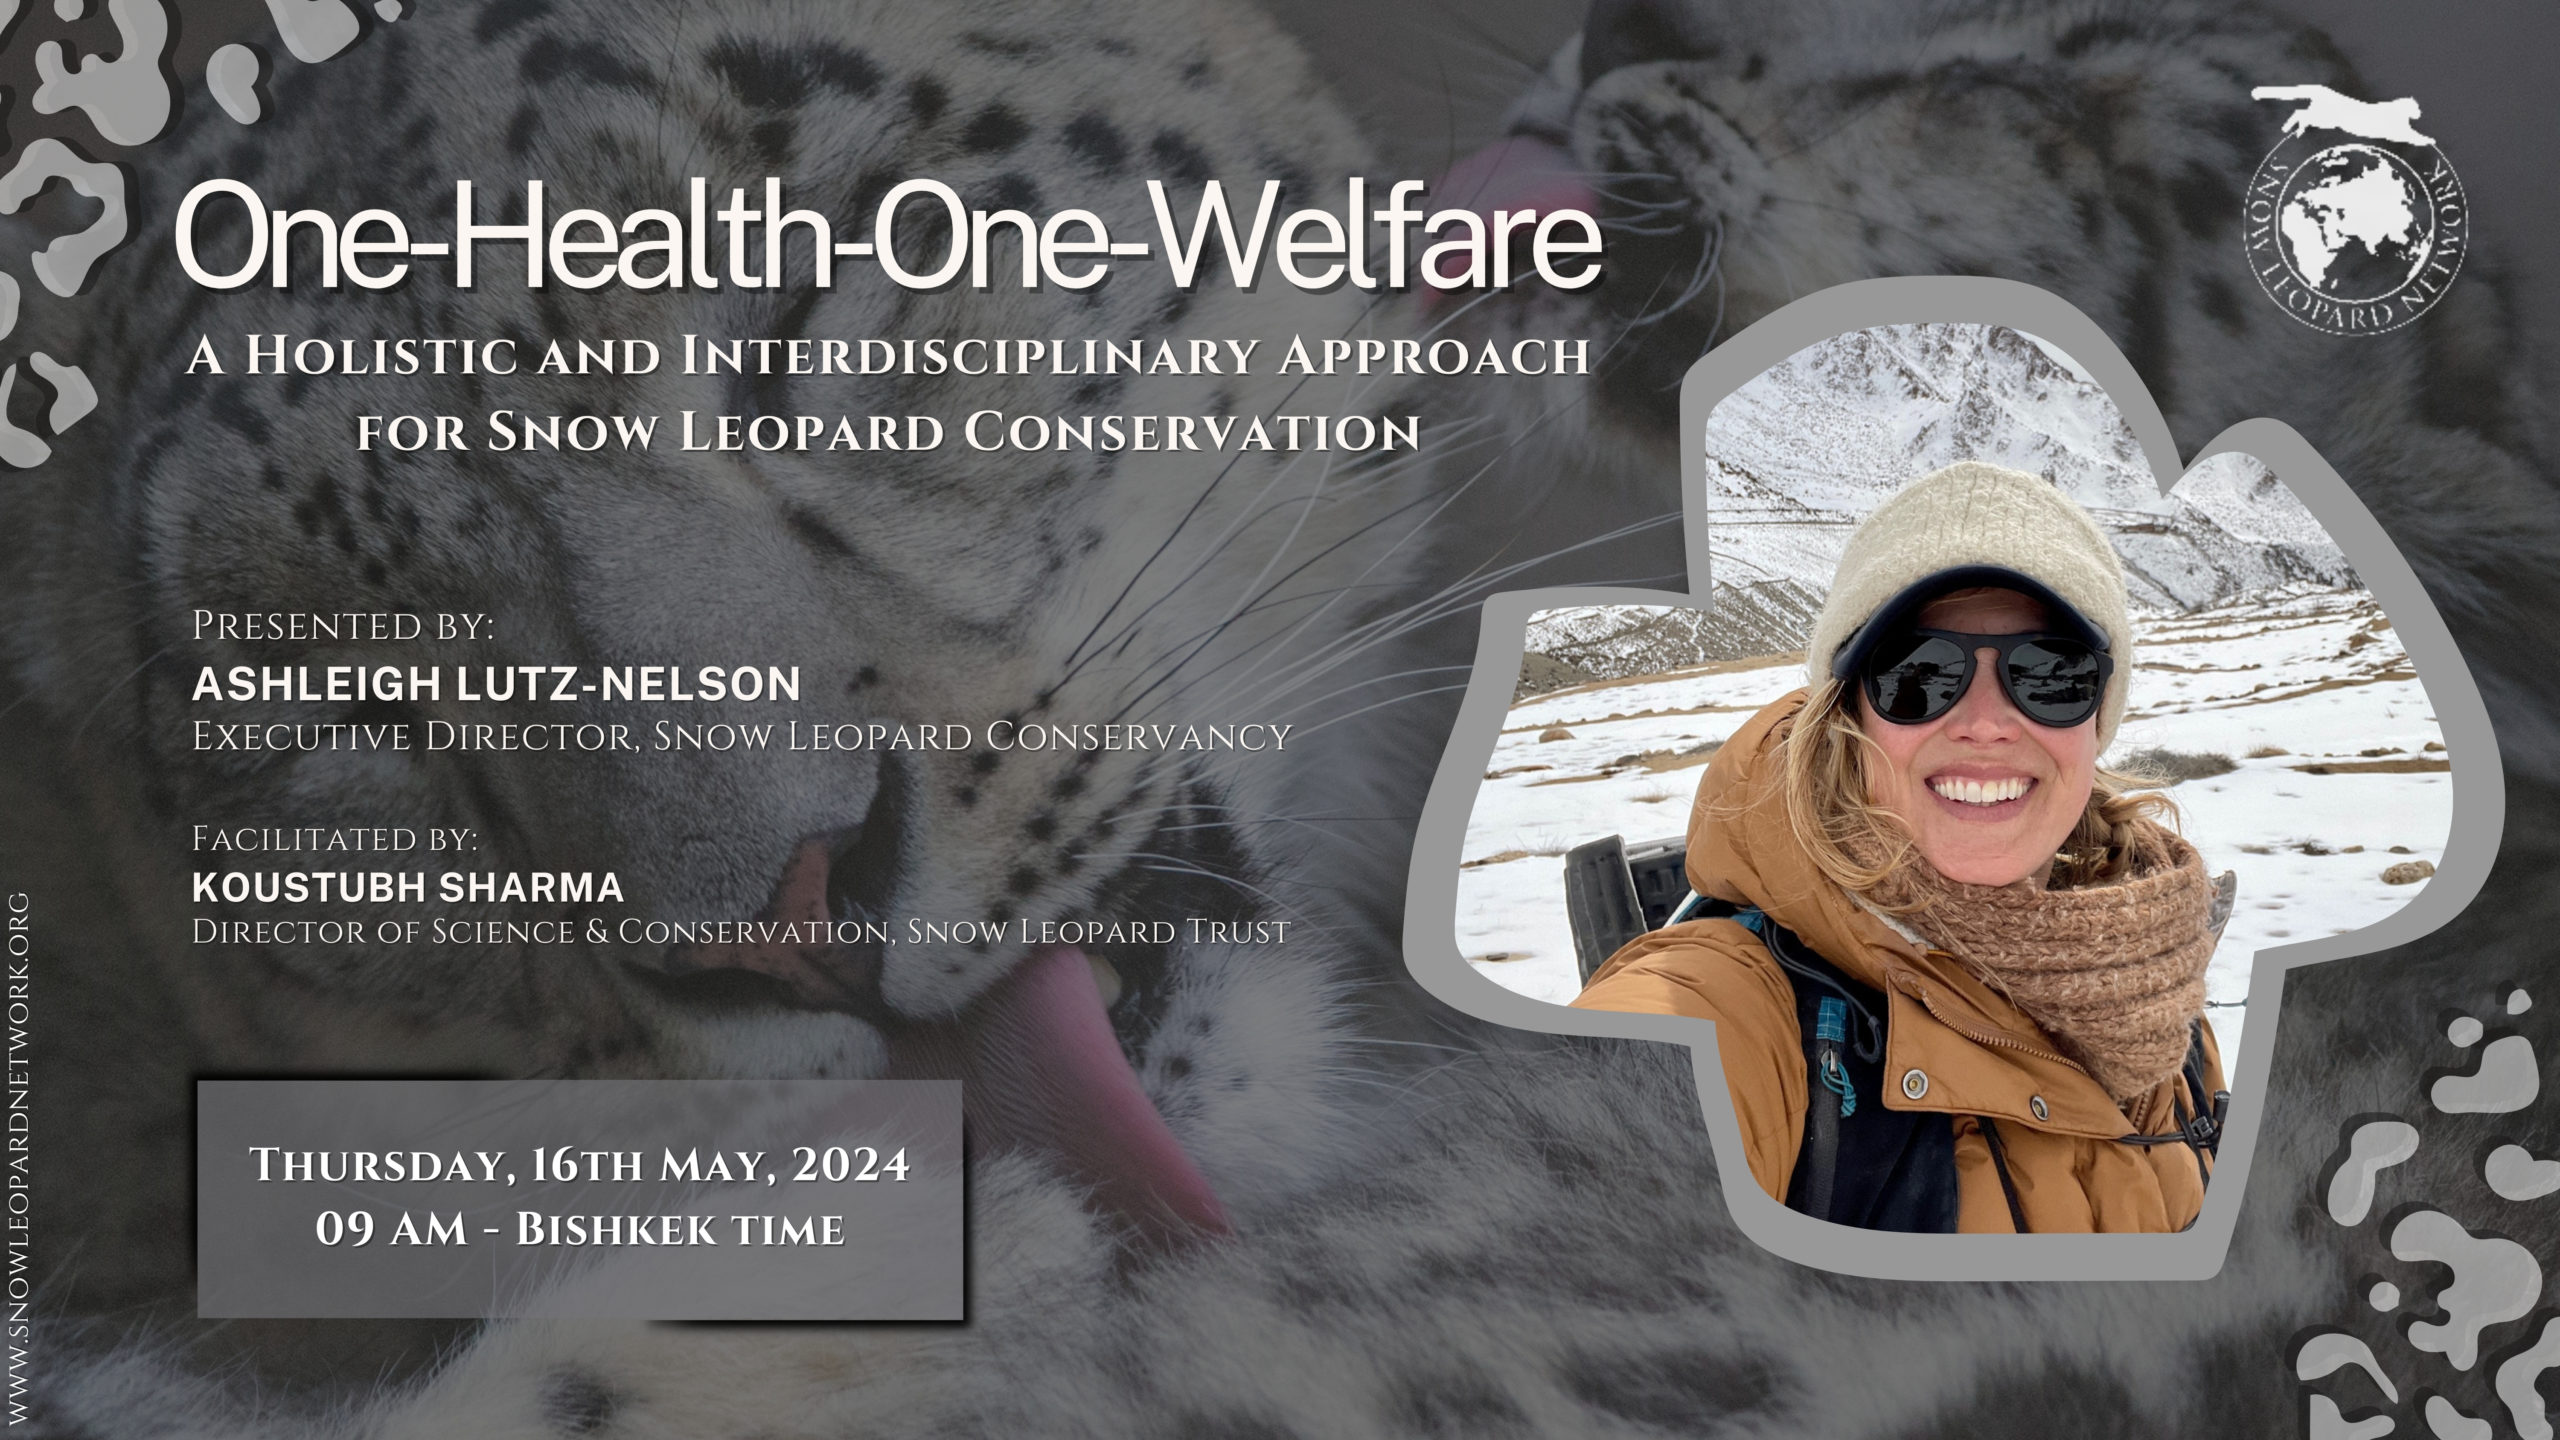 SLN Webinar: One-Health-One-Welfare: A Holistic and Interdisciplinary Approach for Snow Leopard Conservation